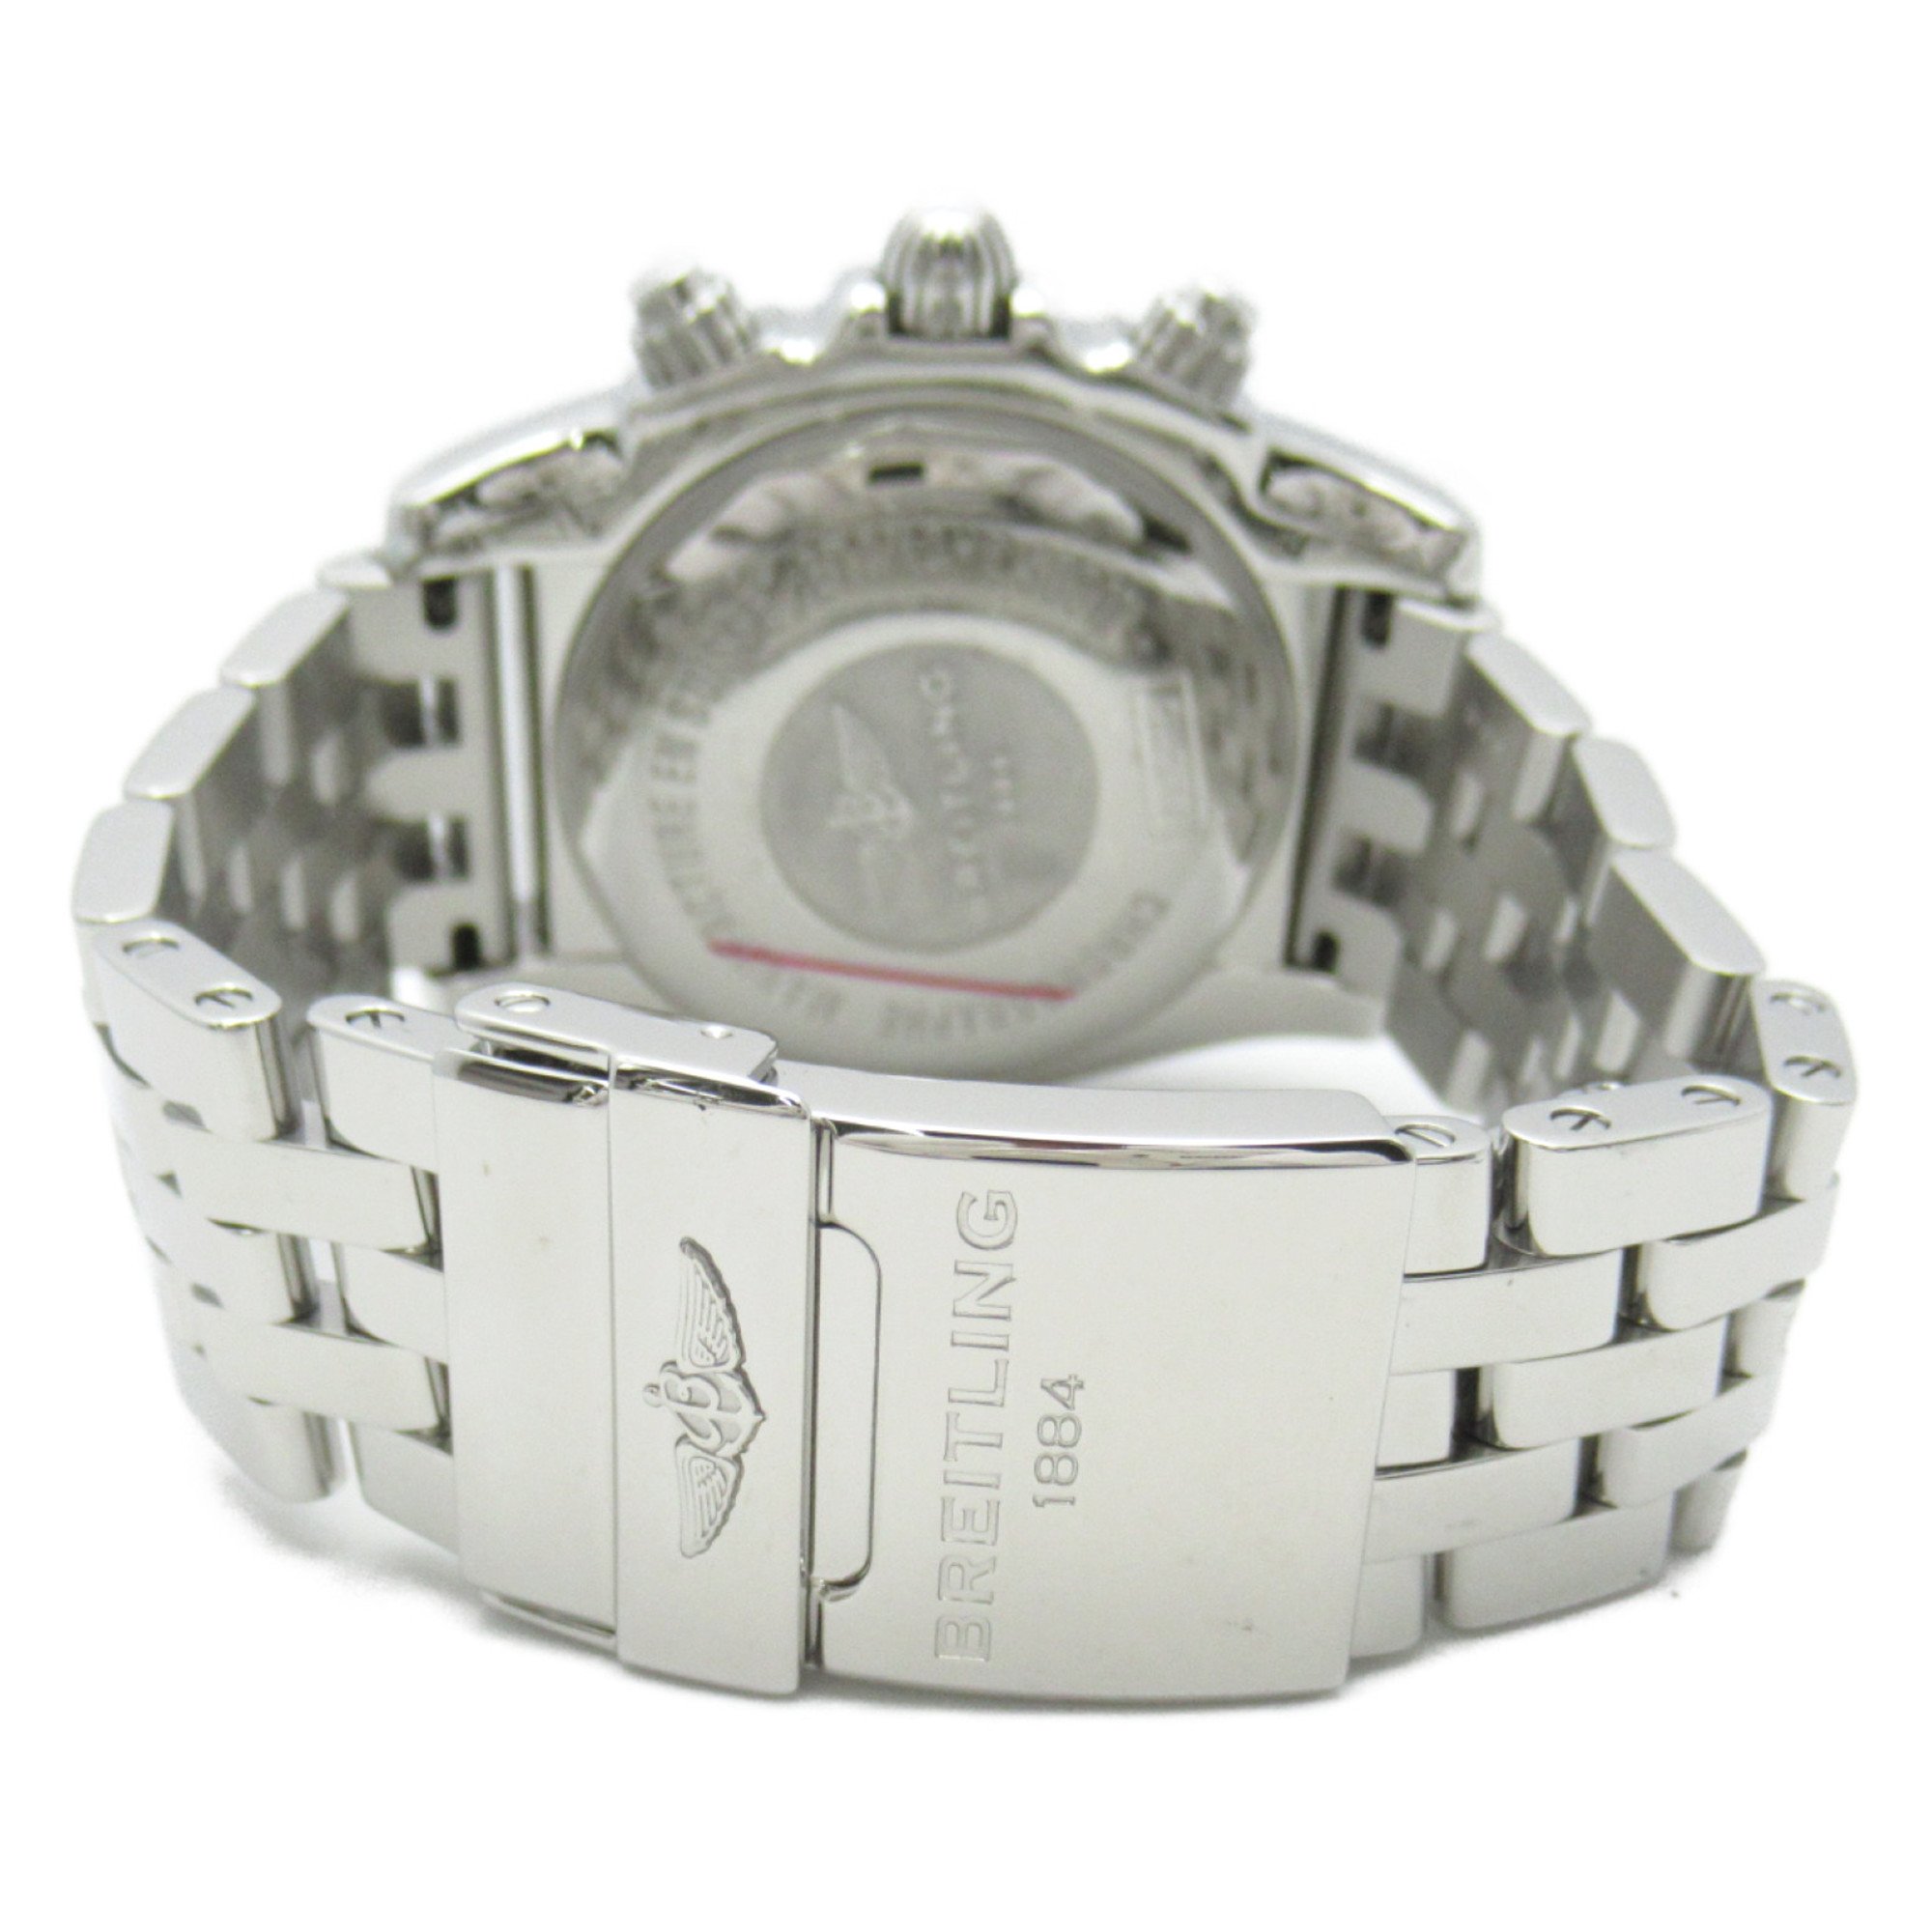 BREITLING Chronomat Wrist Watch Watch Wrist Watch AB0110 Mechanical Automatic Black  Stainless Steel AB0110